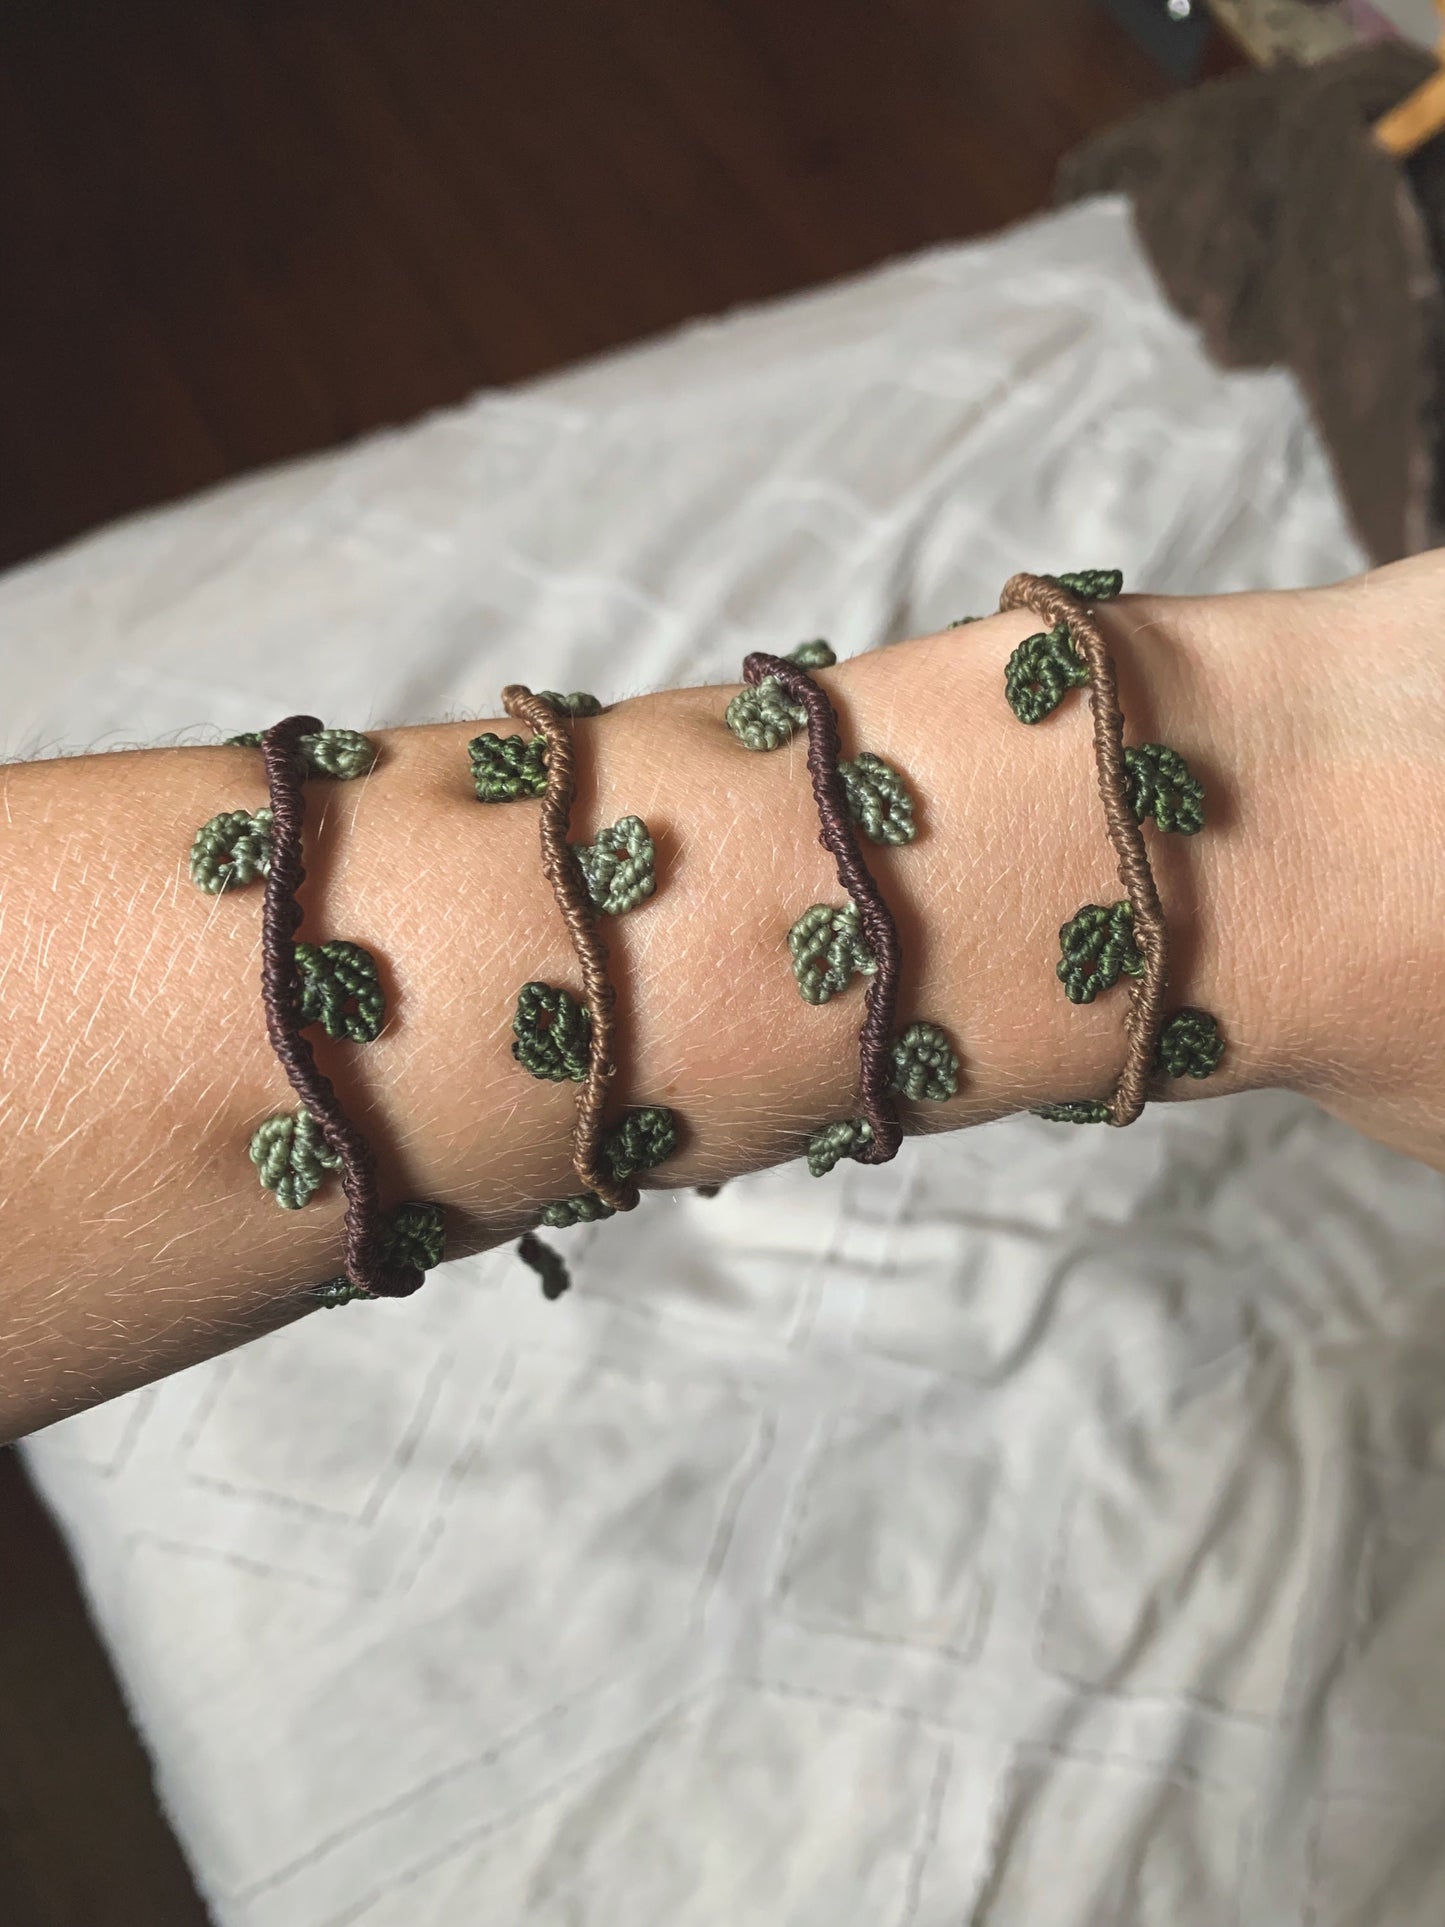 Leafy Bracelets - MADE TO ORDER - Micromacrame Jewelry - Fairy Bracelets - Boho Macrame Bracelet